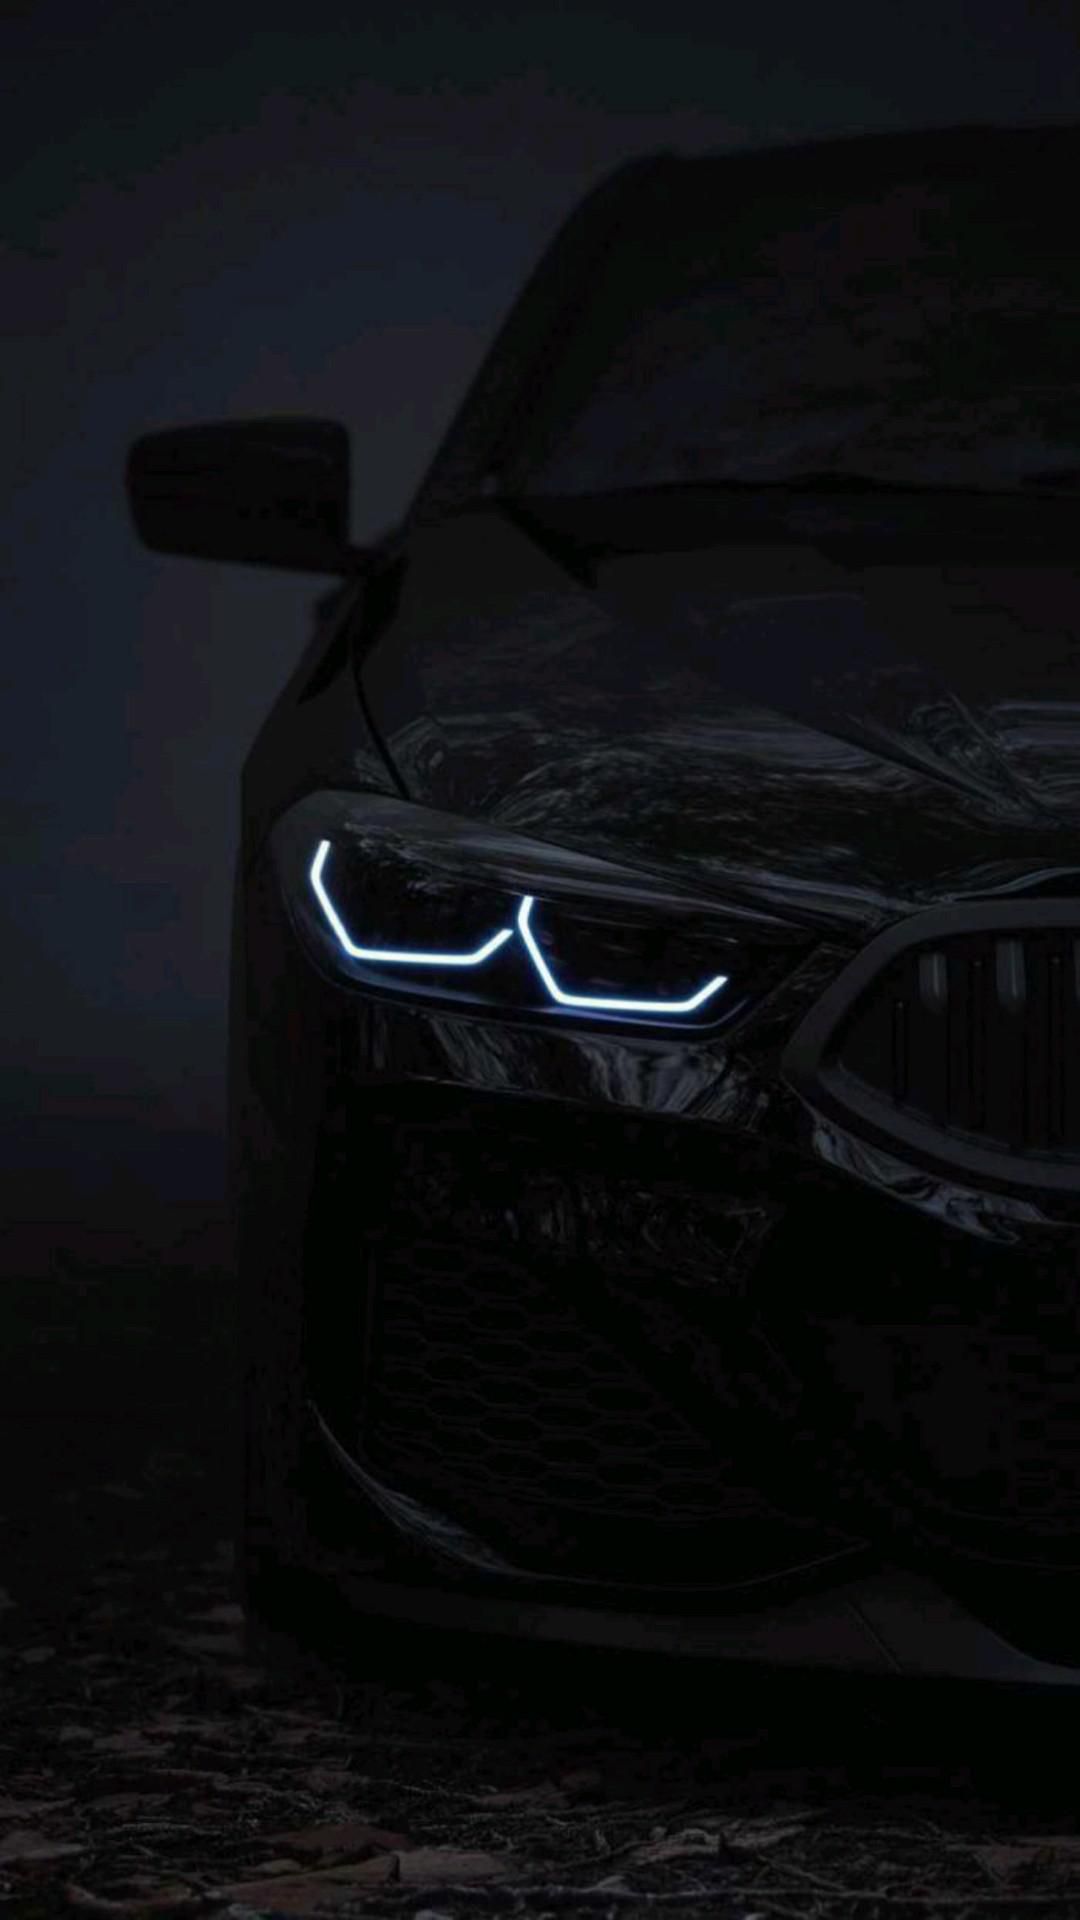 BMW M5 4K WALLPAPER. Bmw iphone wallpaper, Car iphone wallpaper, Mustang iphone wallpaper